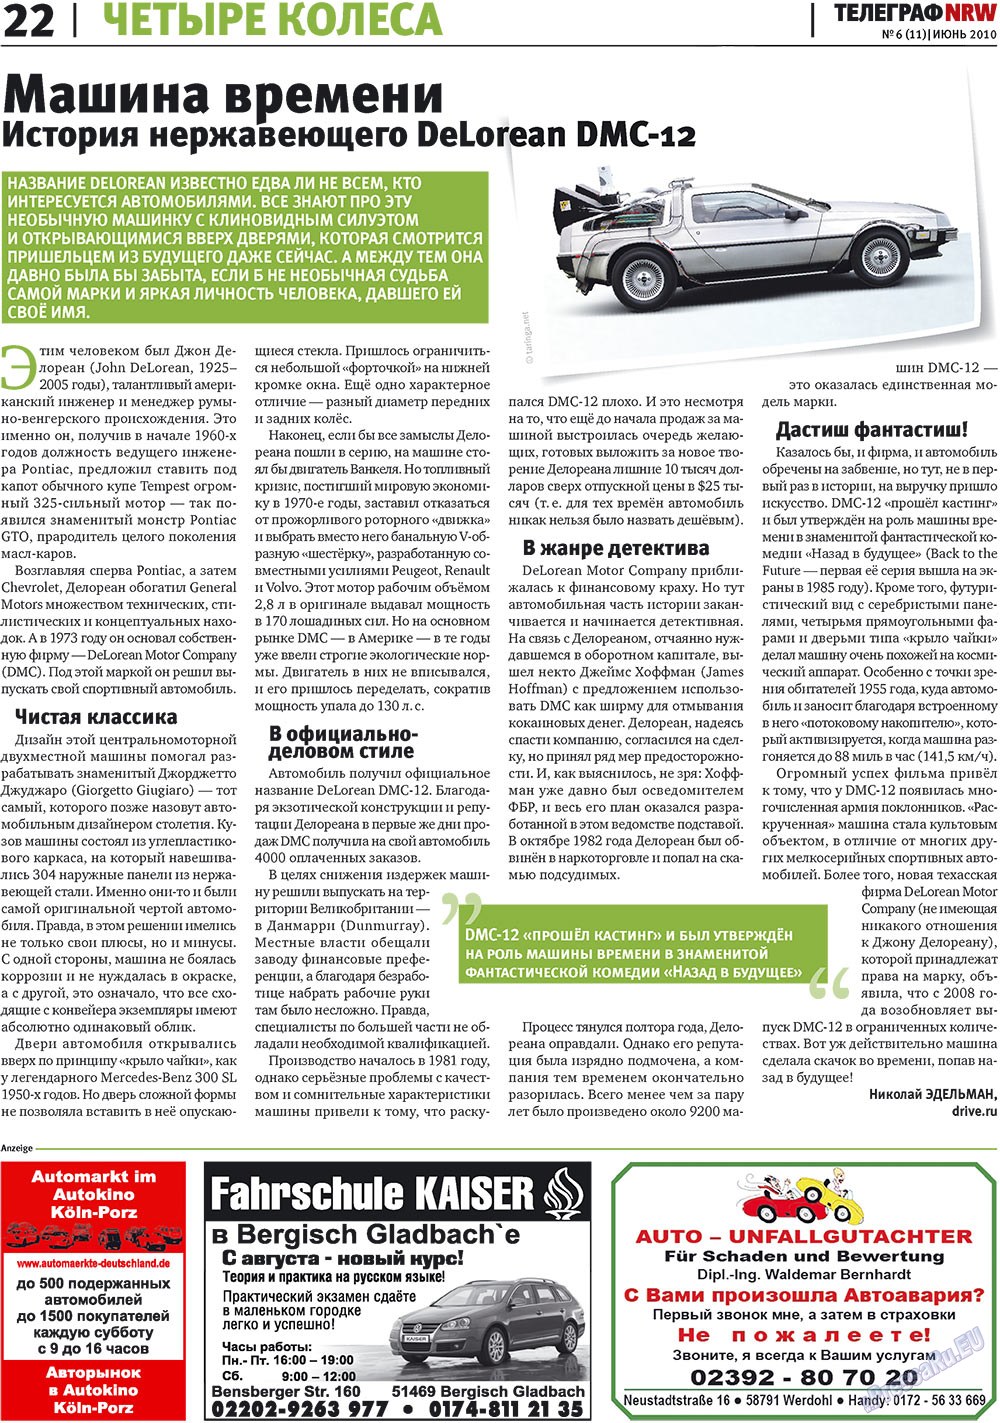 Телеграф NRW, газета. 2010 №6 стр.22